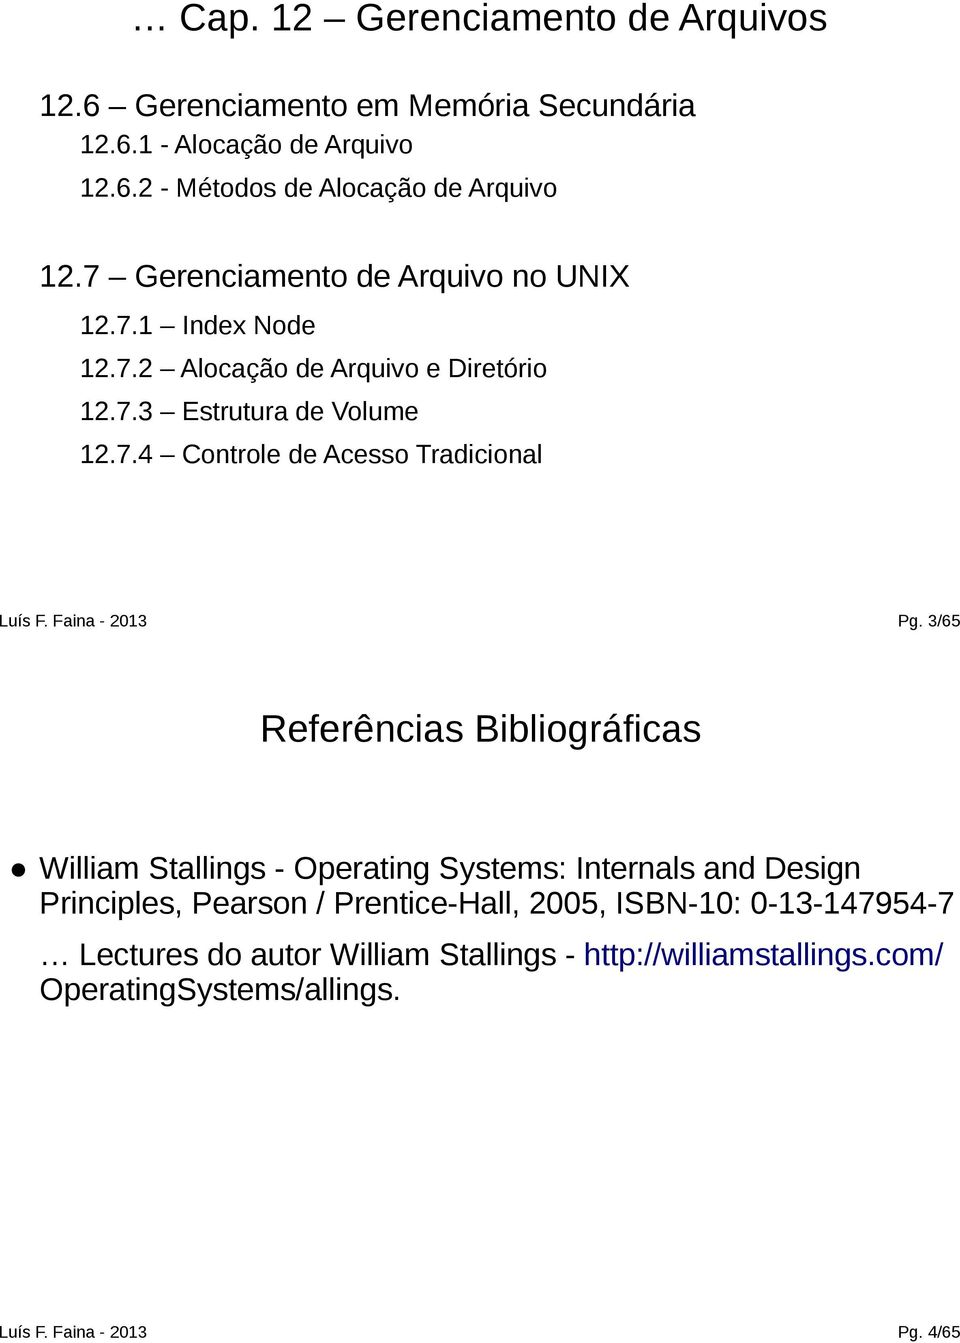 3/65 Referências Bibliográficas William Stallings - Operating Systems: Internals and Design Principles, Pearson / Prentice-Hall, 2005,